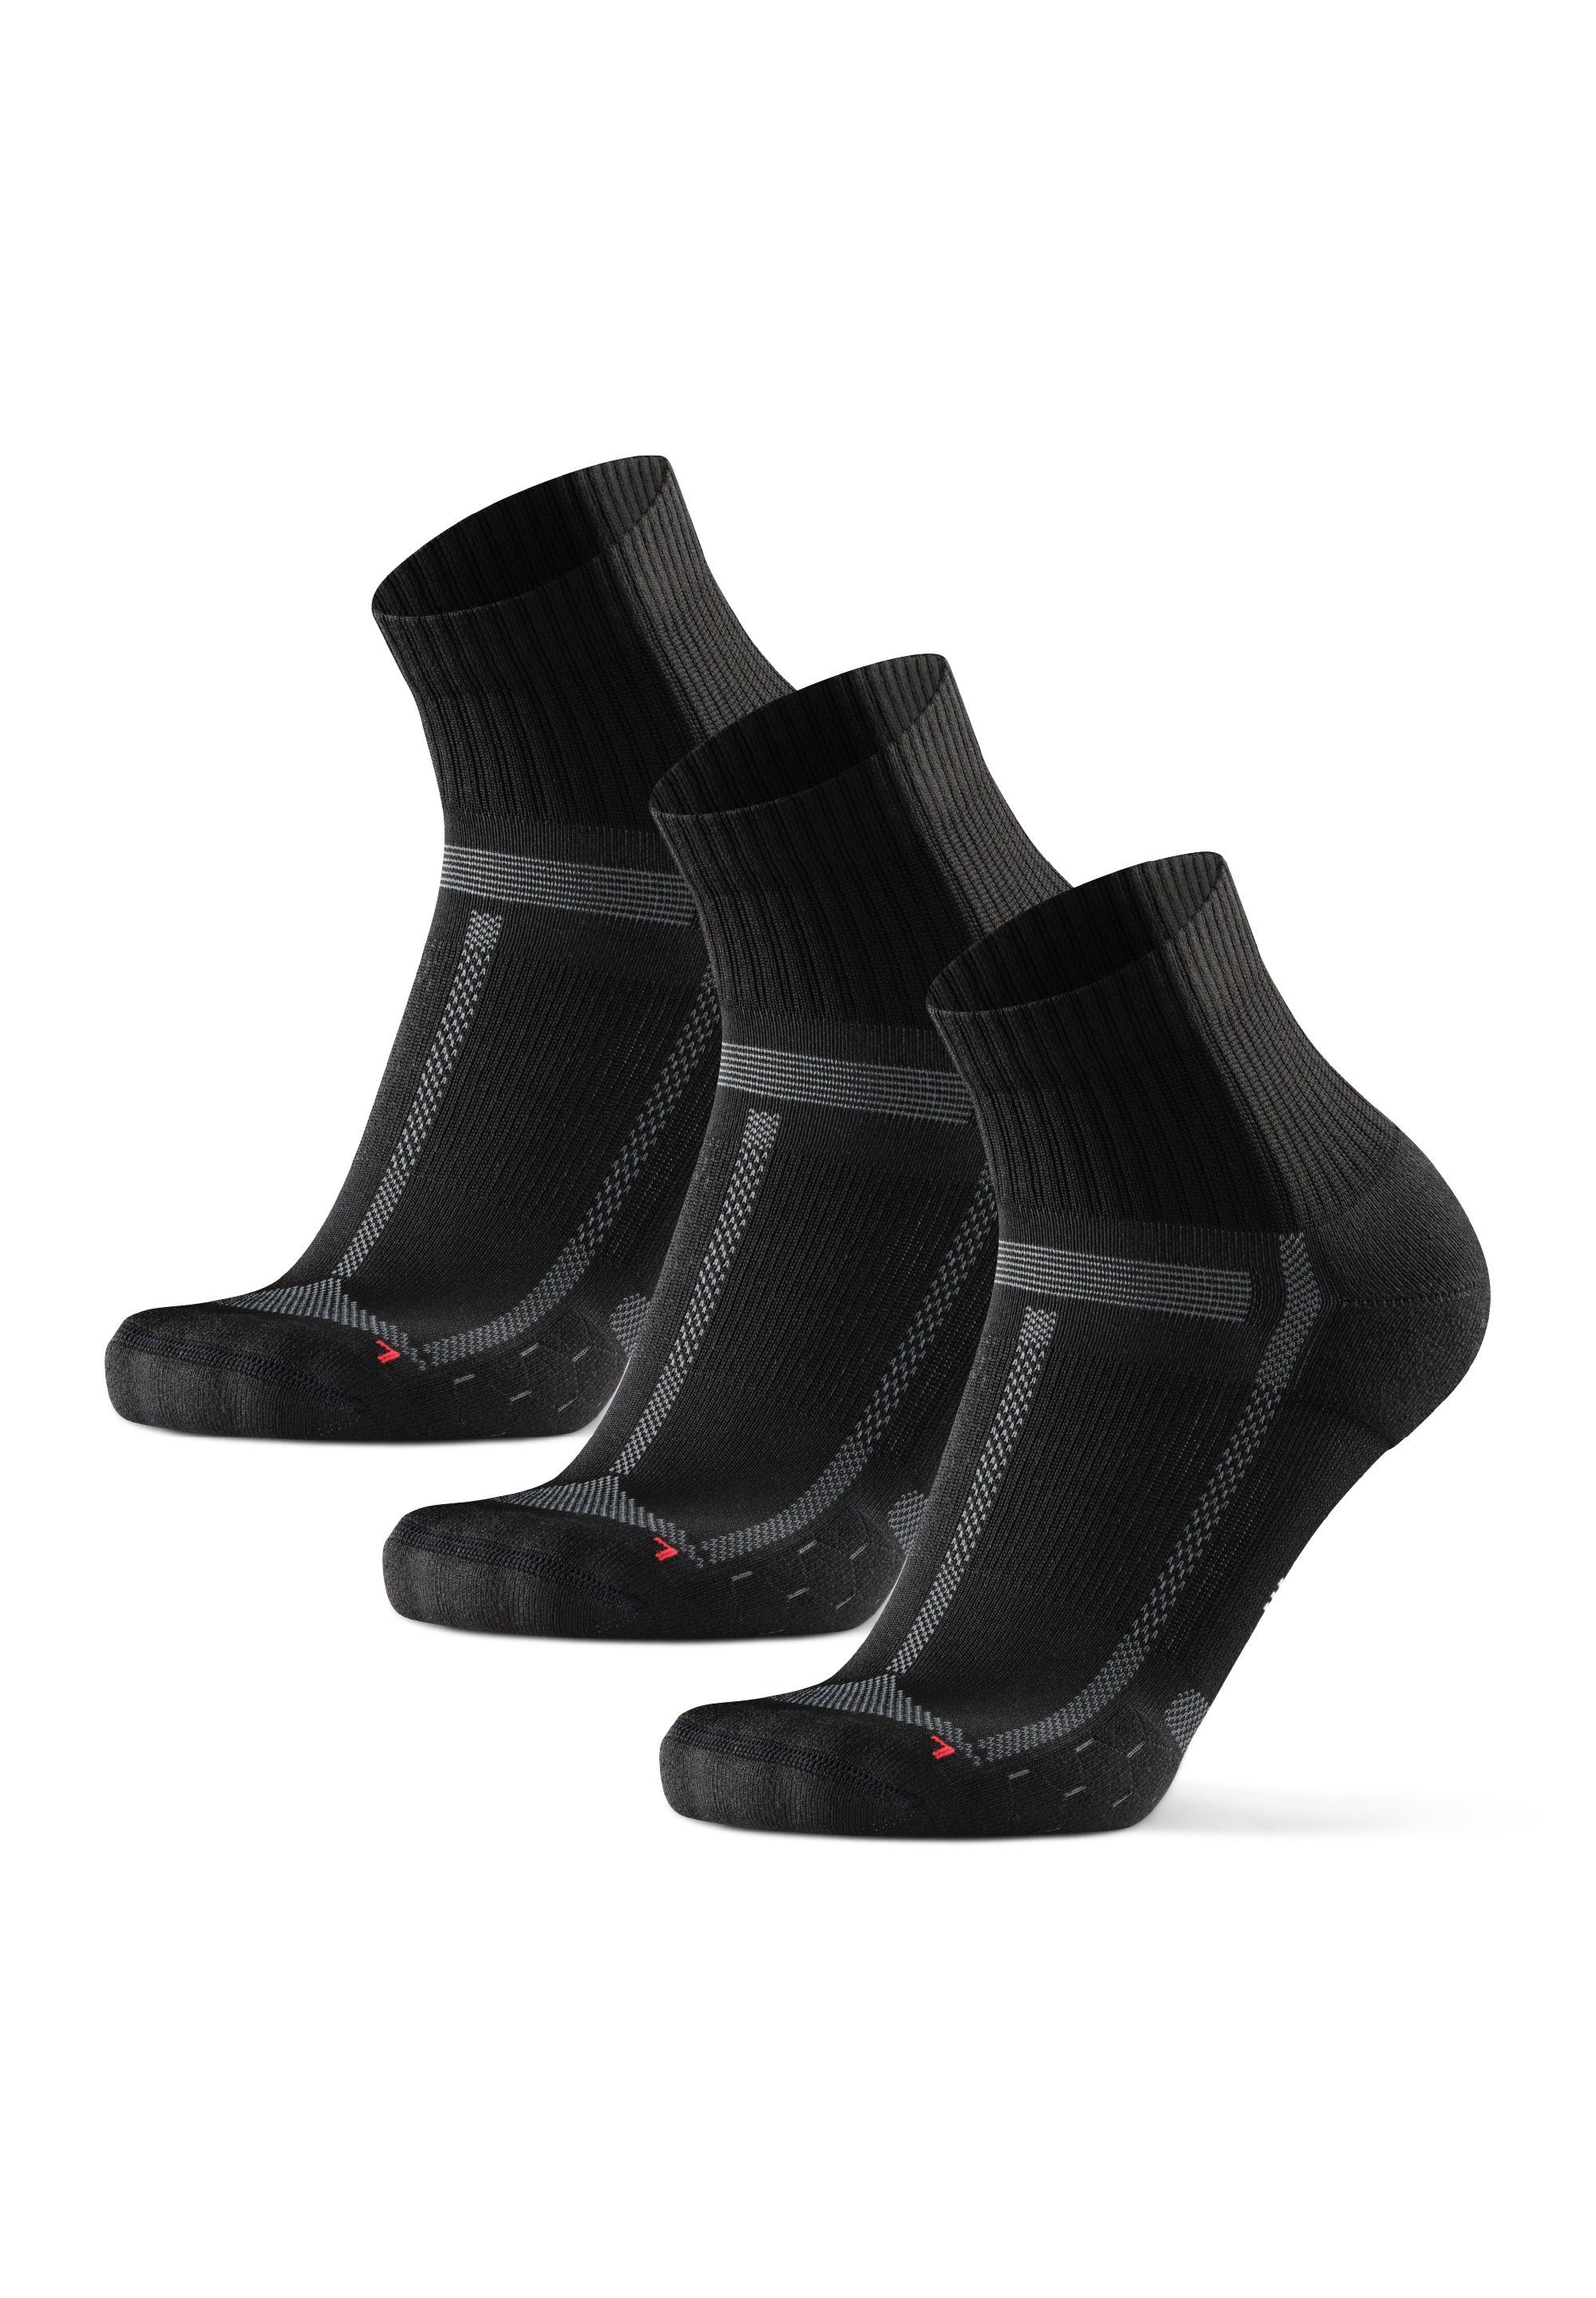 DANISH ENDURANCE Laufsocken Long Distance Running Socks (Packung, 3-Paar) Anti-Blasen, Technisch Black/Grey